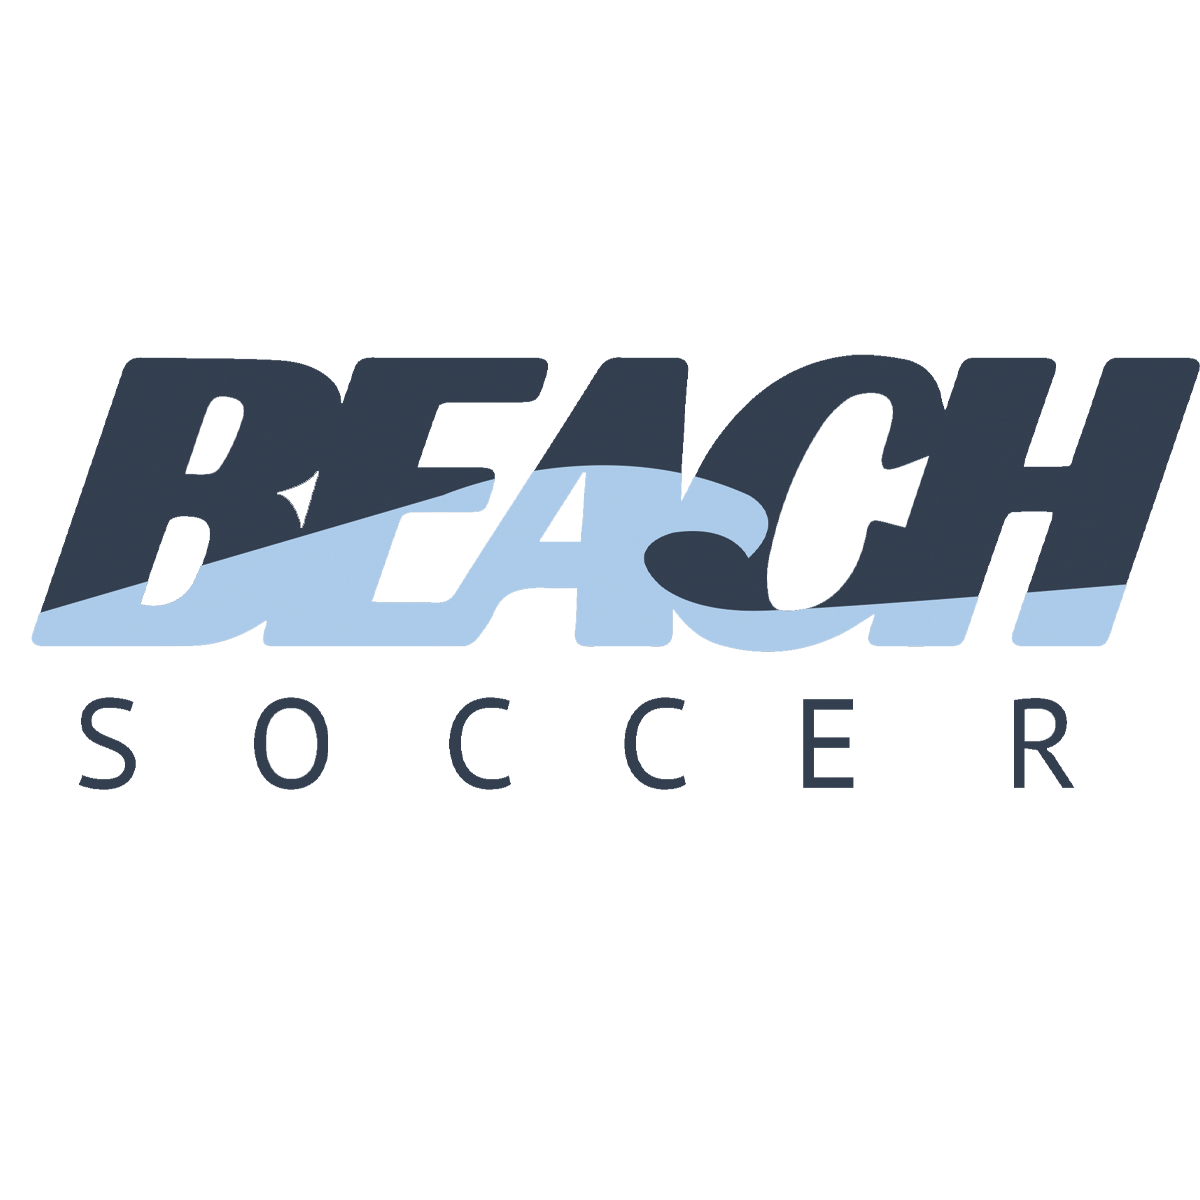 Long Beach Soccer Team Store